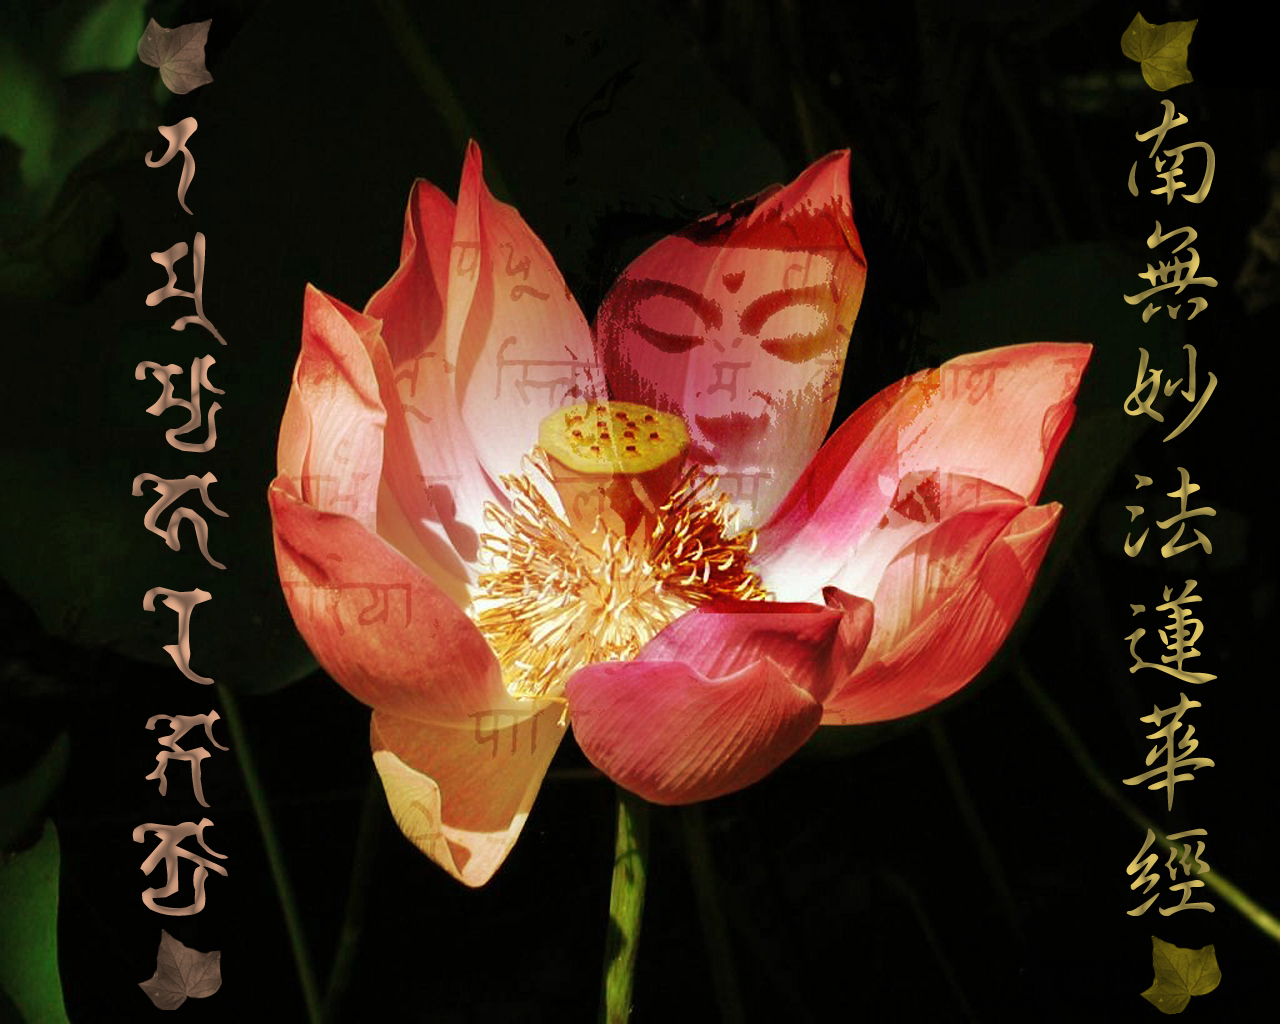 http://buddhaonthewall.files.wordpress.com/2009/07/buddha-in-lotus-daimoku1280.jpg